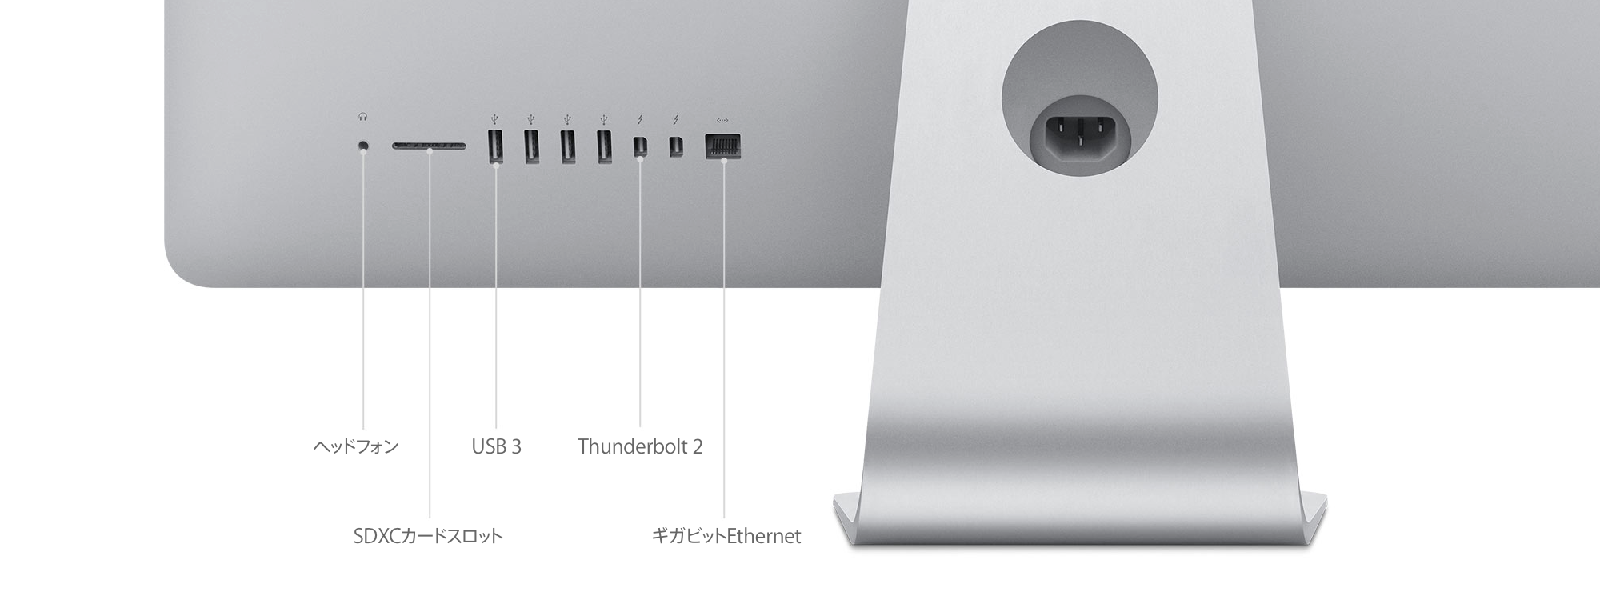 iMac (21.5-inch, Late 2015) - 技術仕様 - Apple サポート (日本)